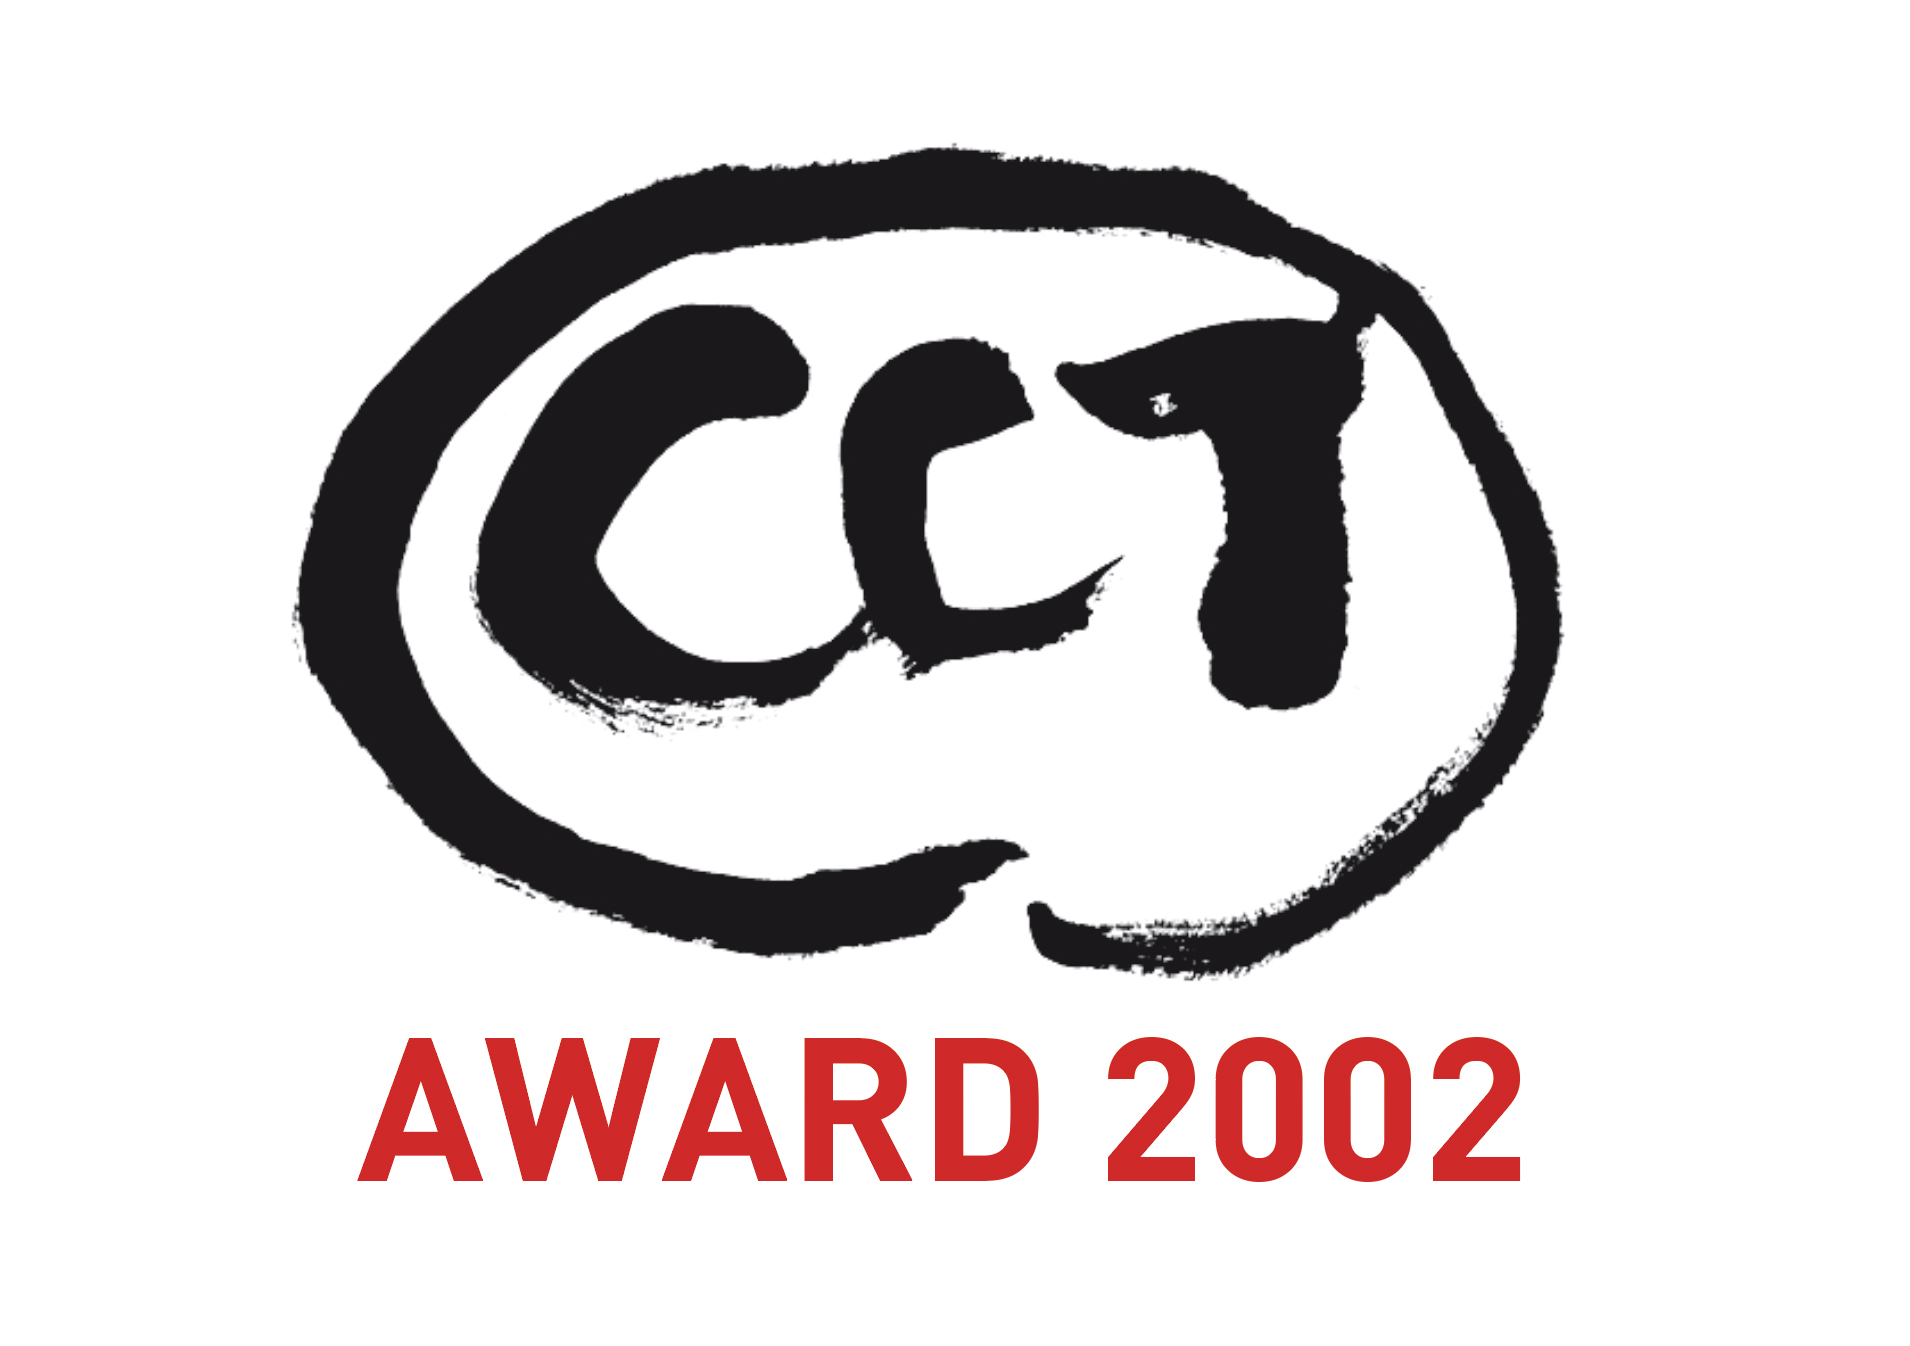 CCT AWARD 2002